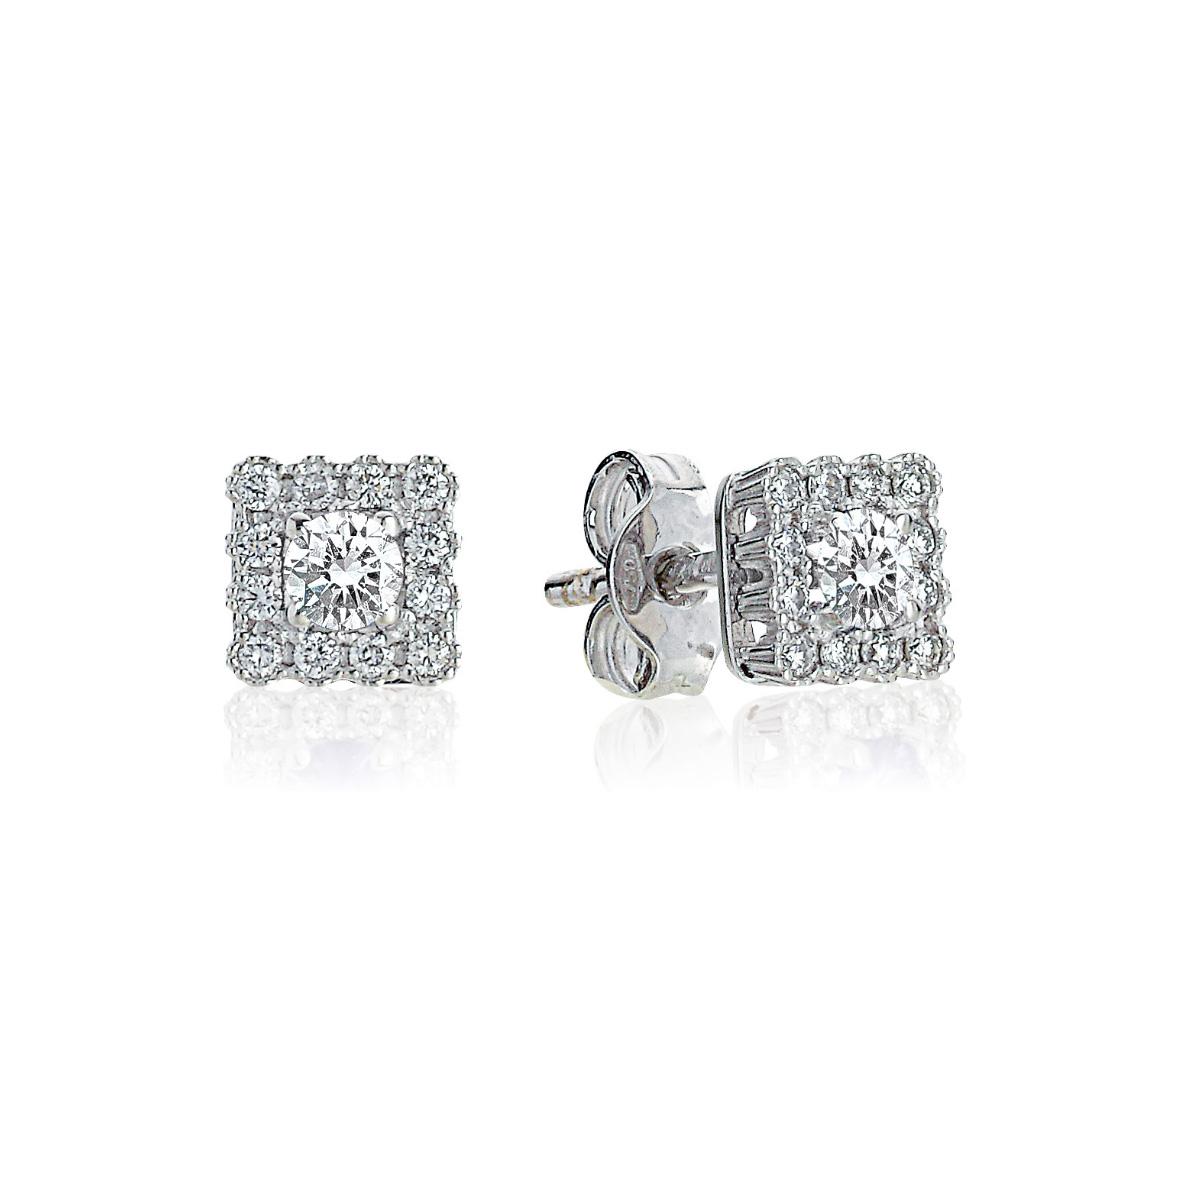 18kt gold earrings with pavé diamonds - OD353/DB-LB